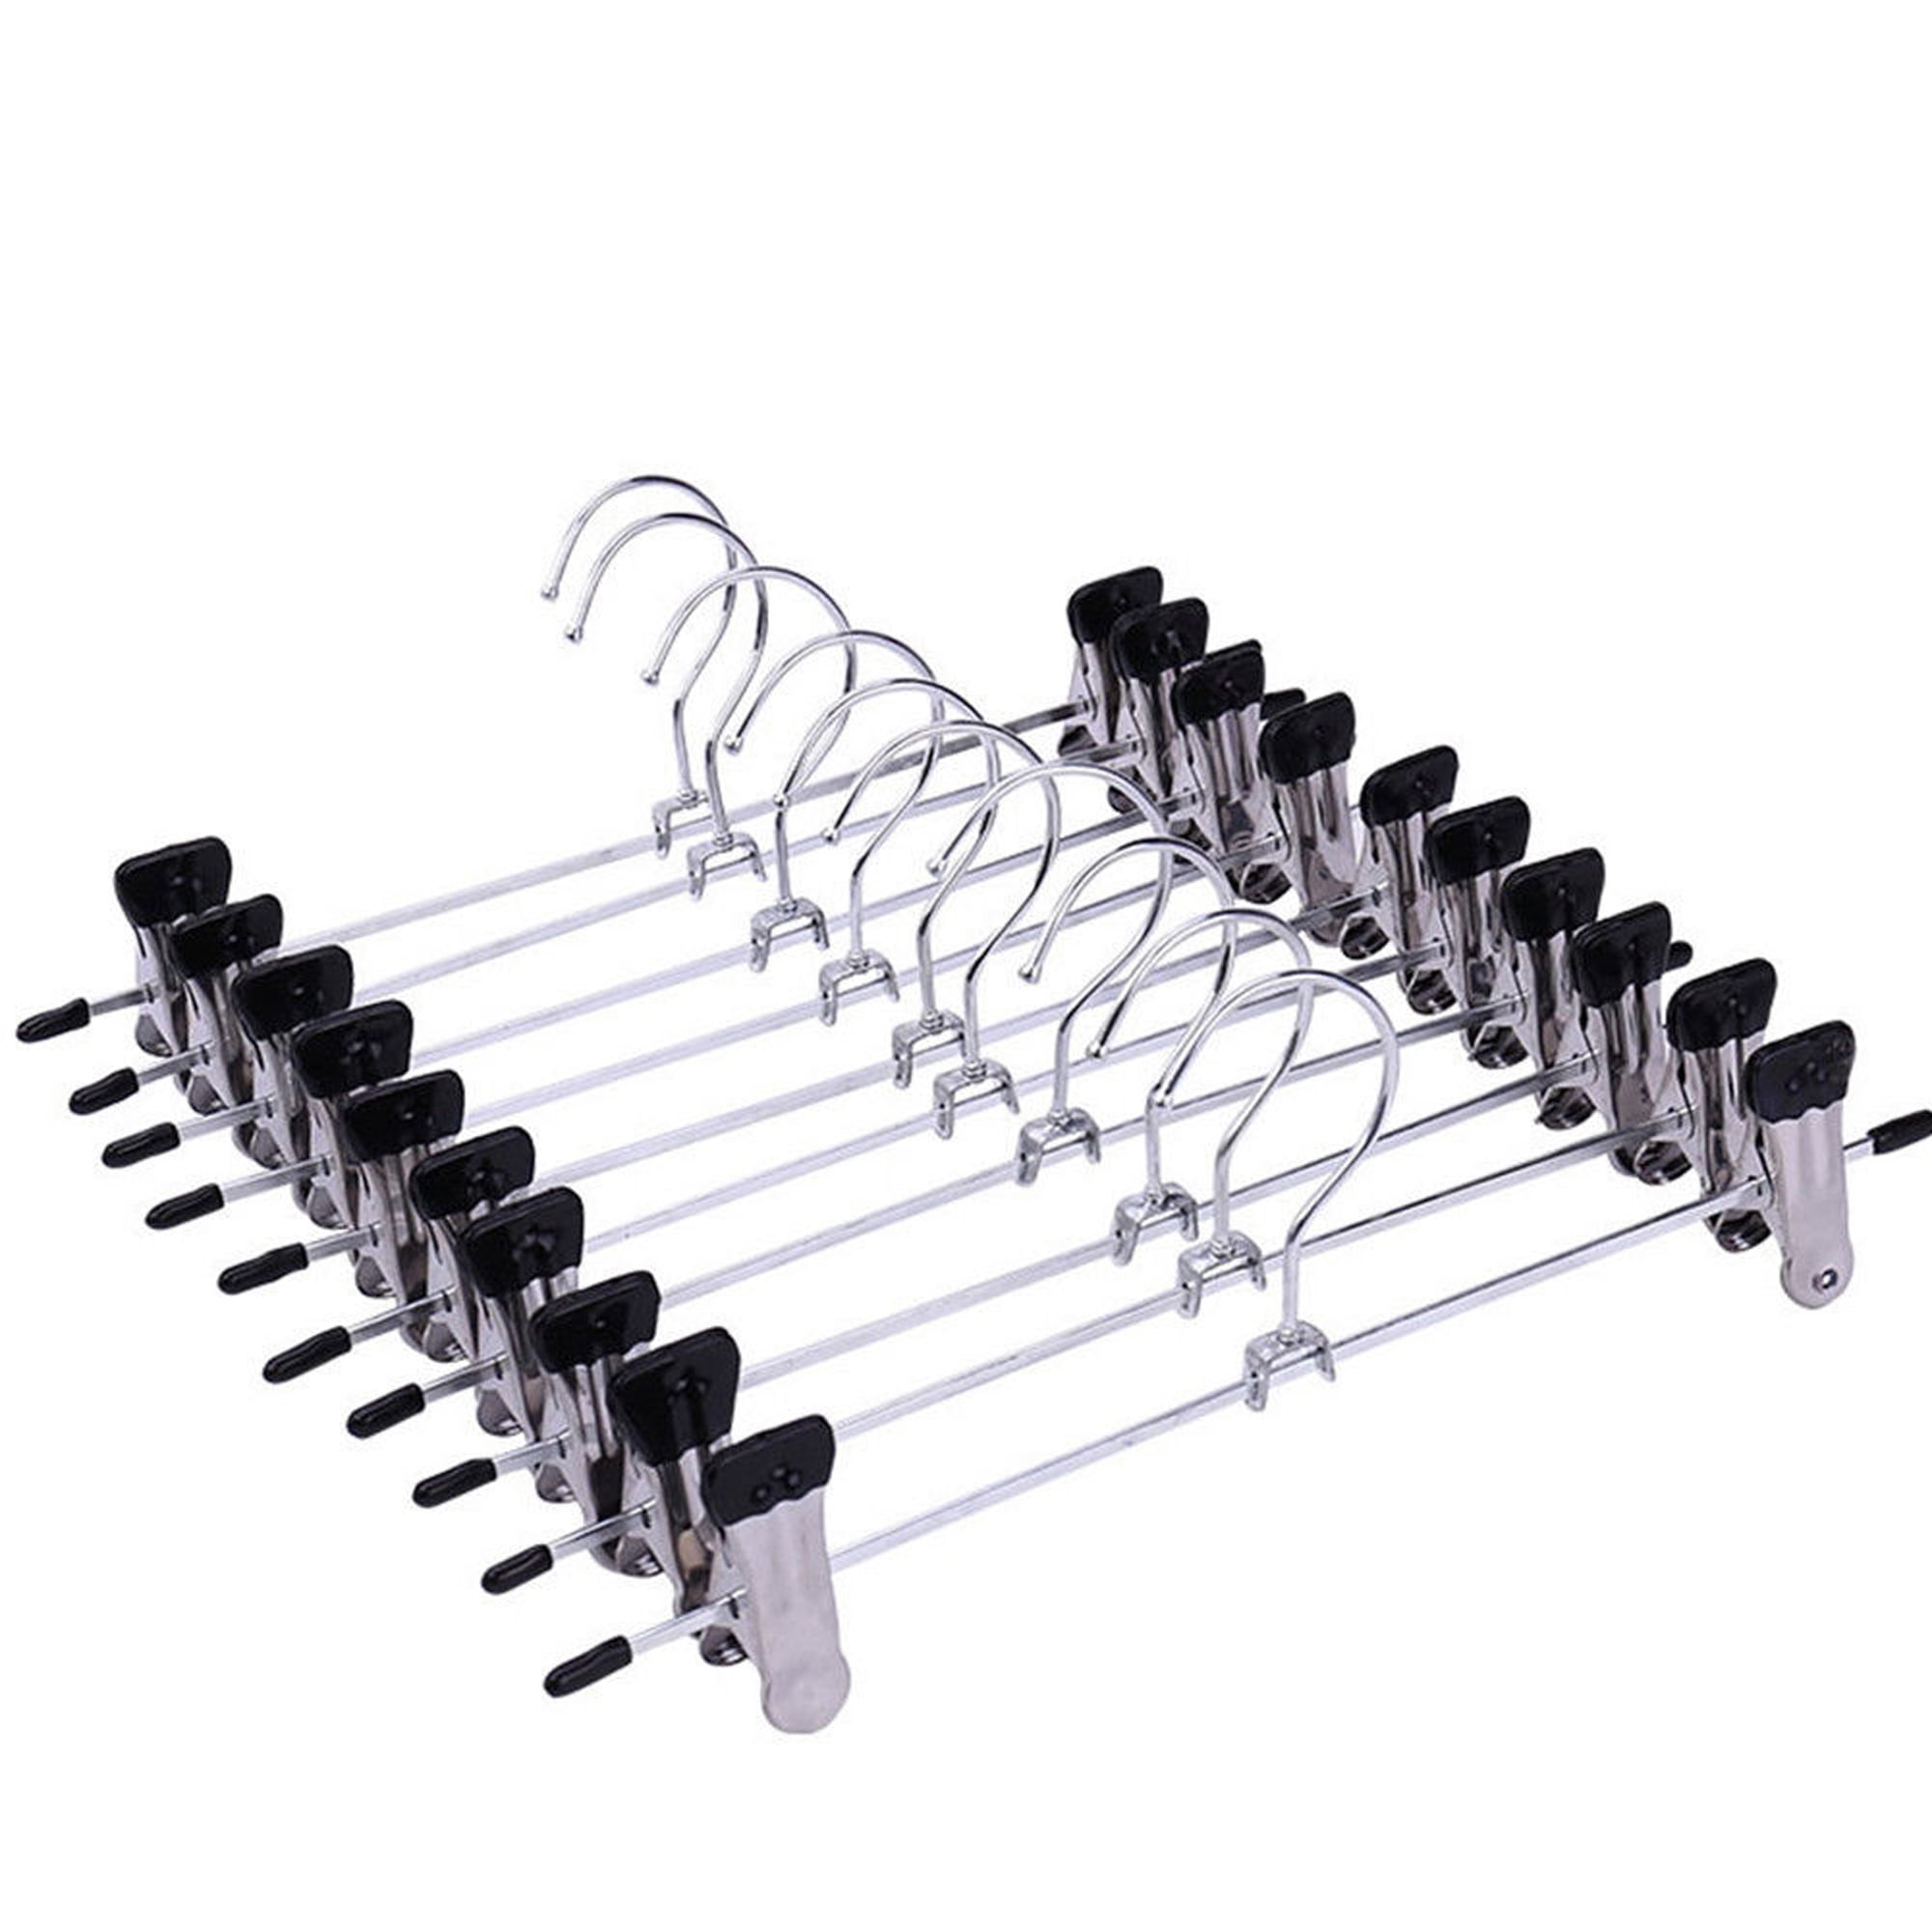 20 x New Non Slip Chrome Metal Home Accessory Single Peg Grip Clip Hook Hangers 